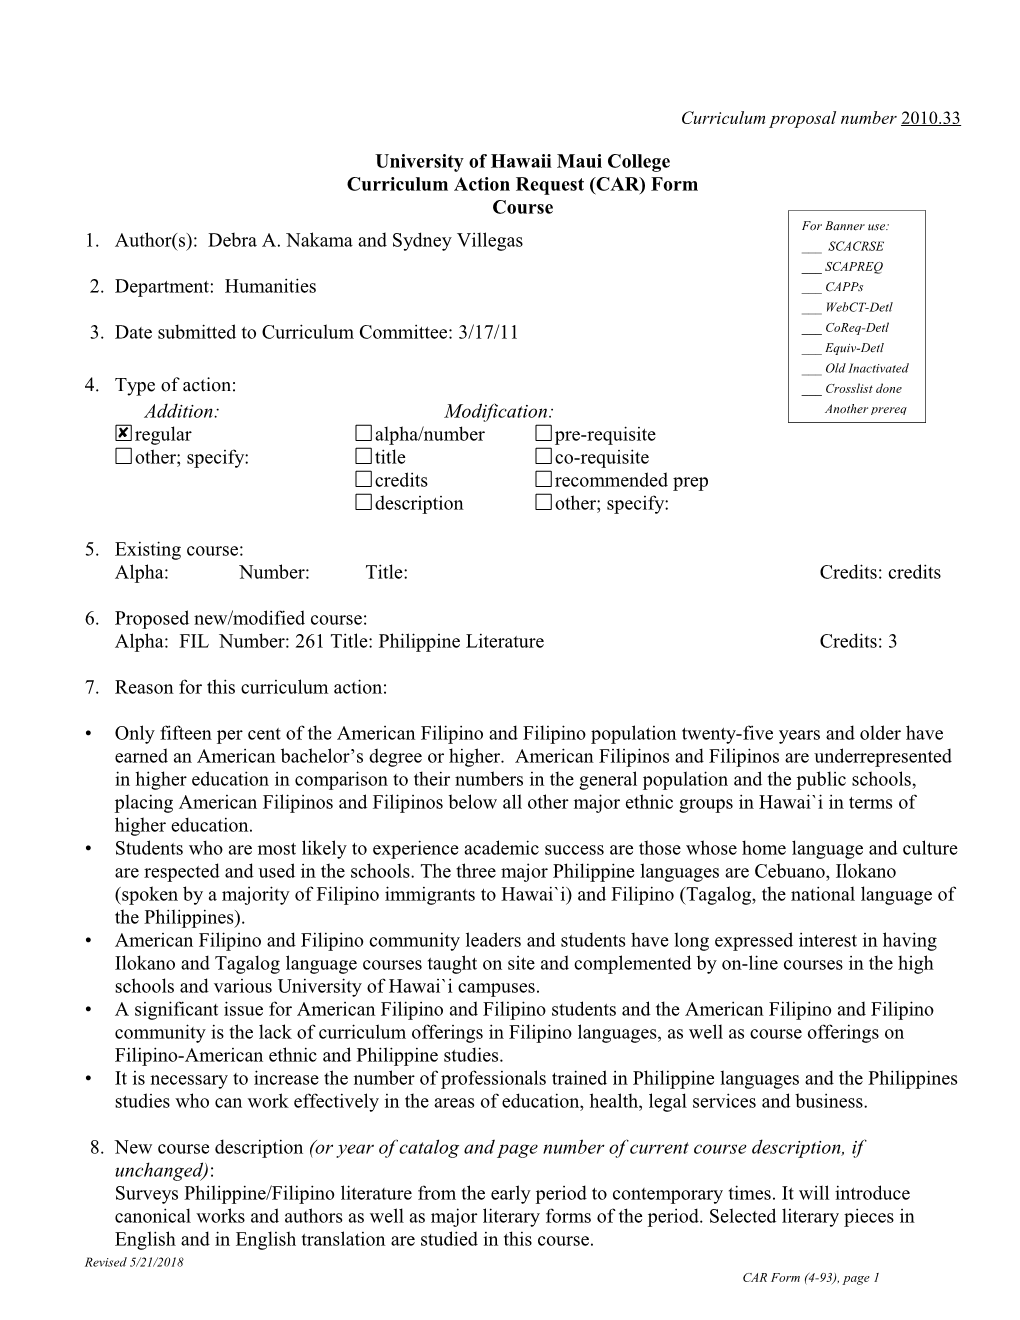 Curriculum Proposal Number 2010